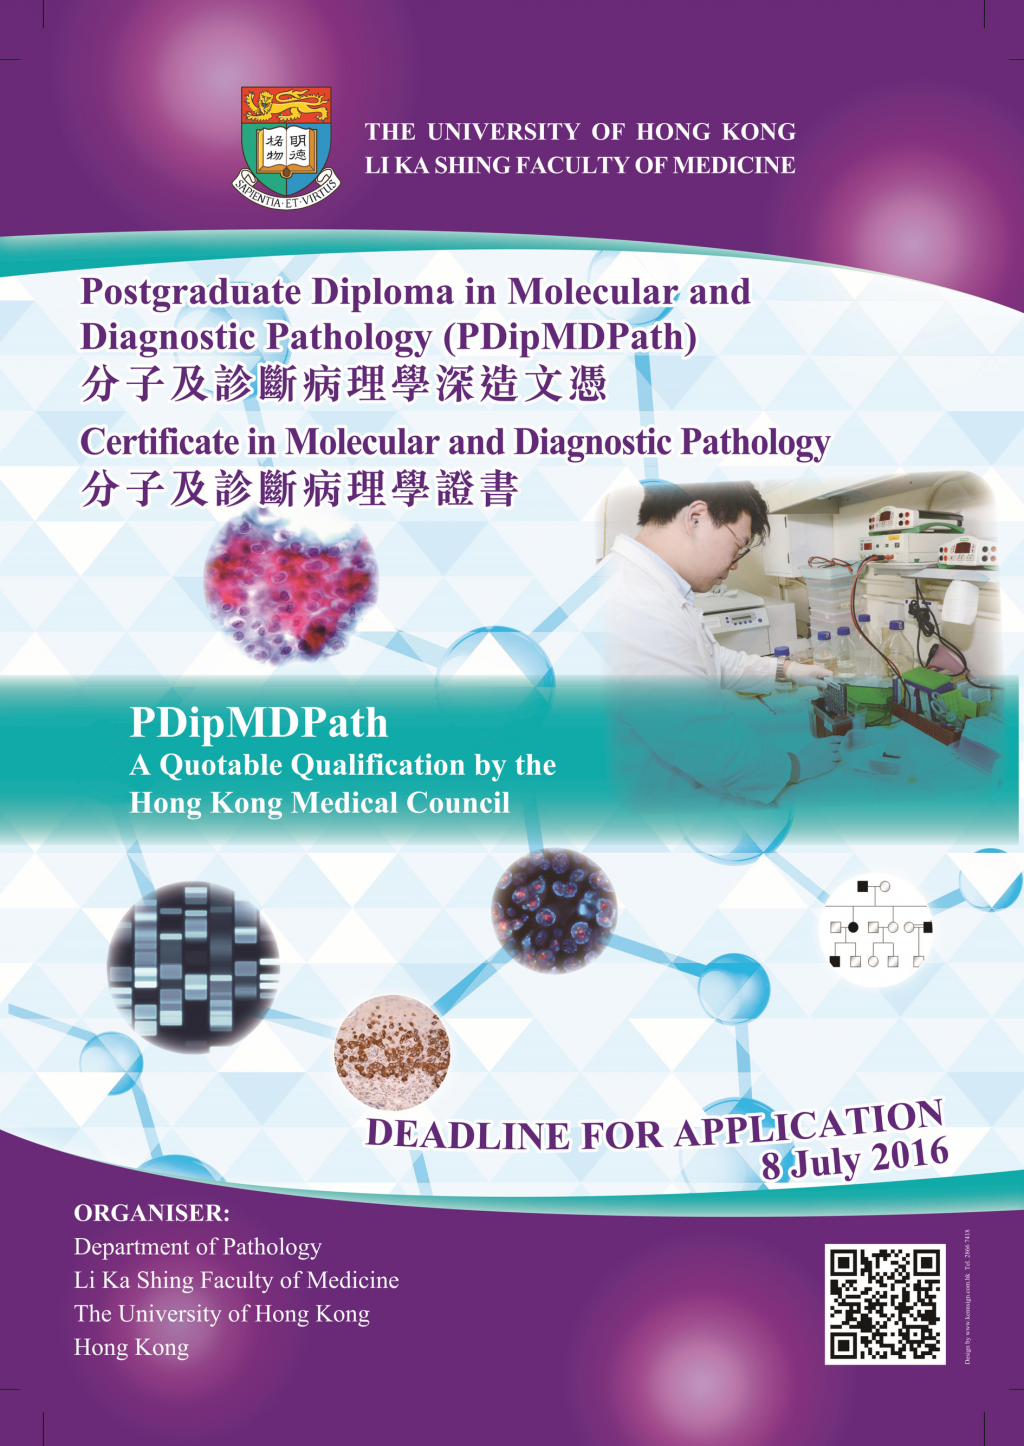 Postgraduate Diploma and Certificate in Molecular & Diagnostic Pathology